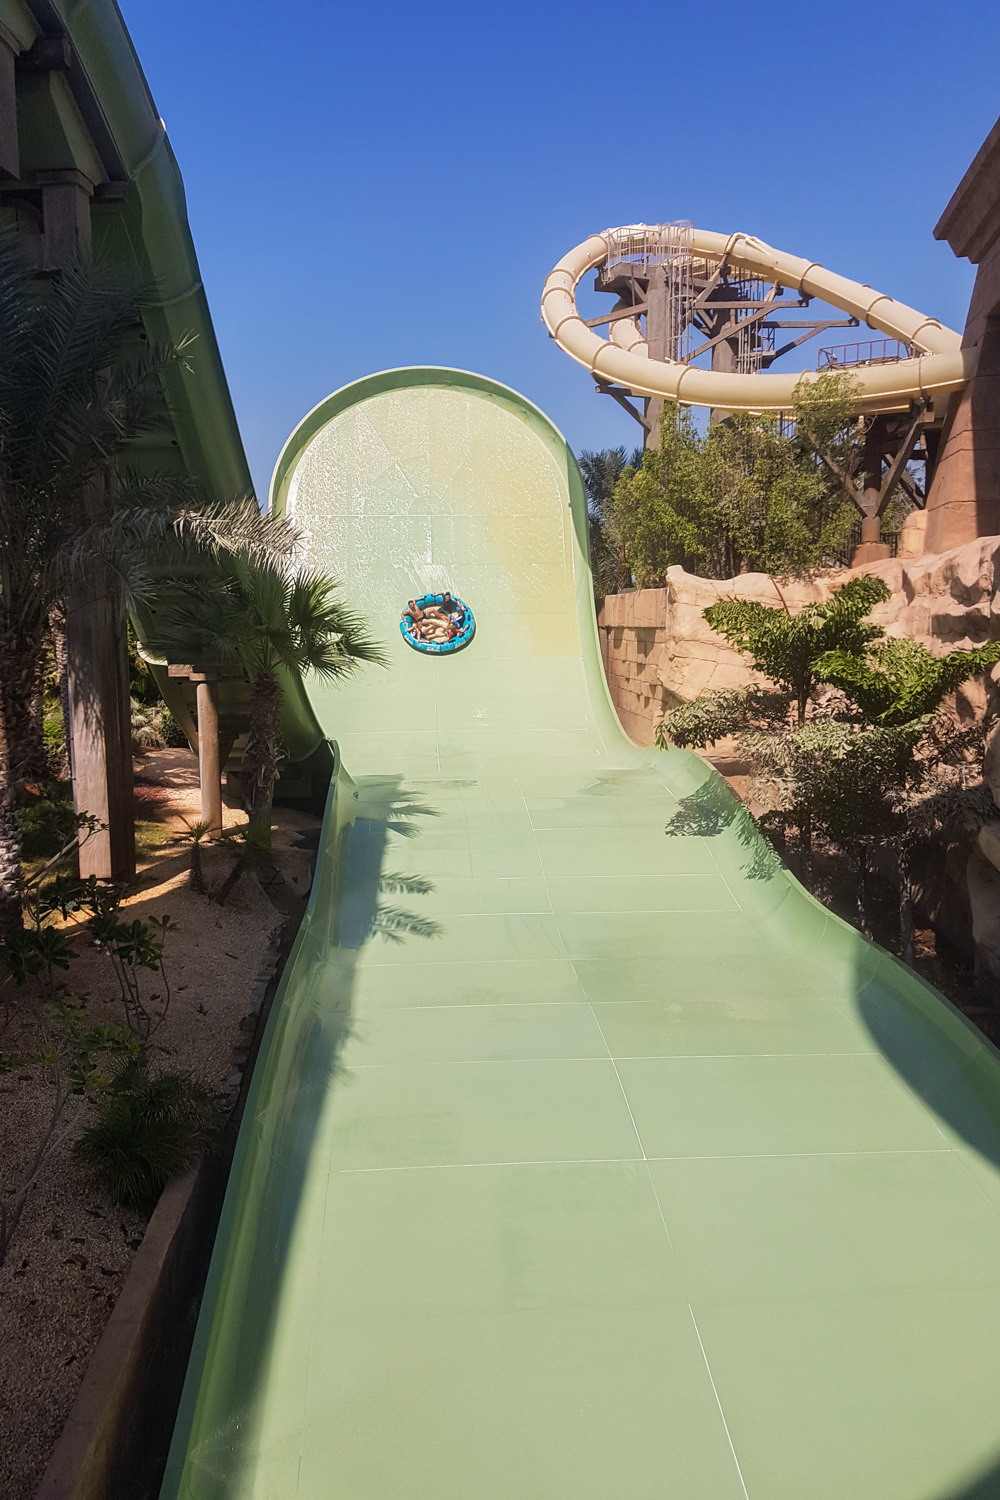 Zoomerango Ride at Aquaventure Waterpark, Atlantis the Palm, Dubai